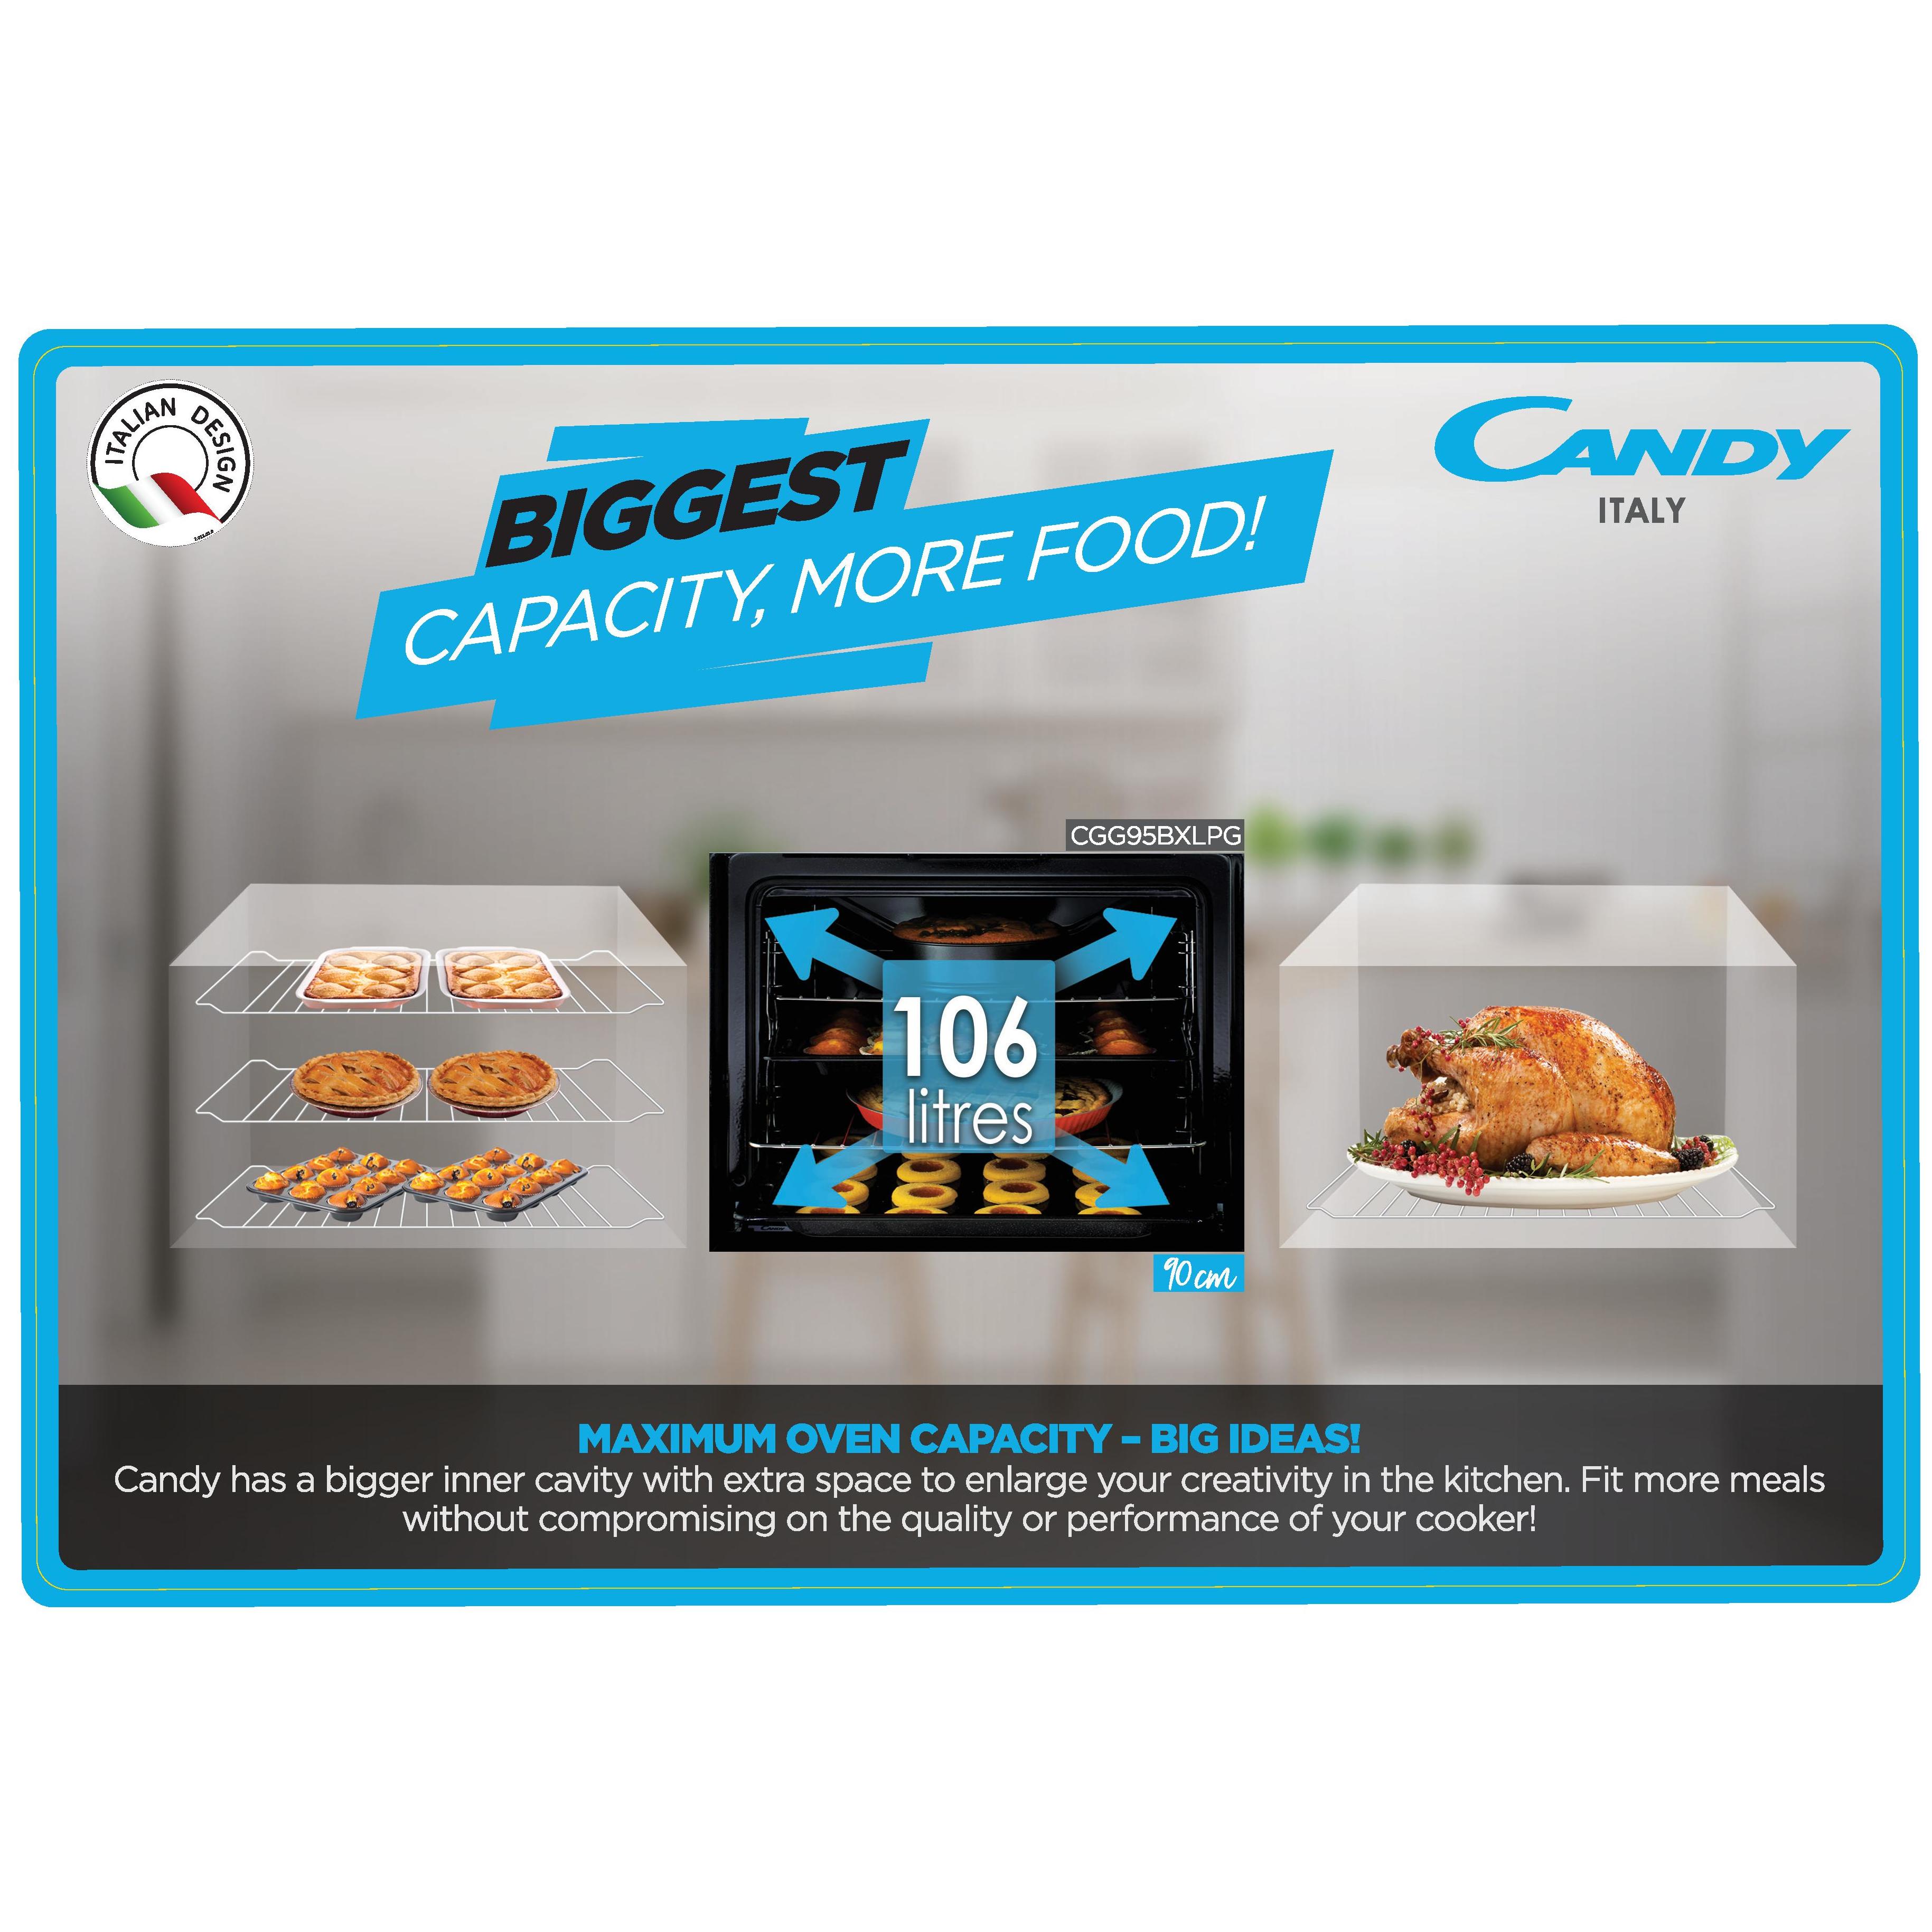 Candy Cooker 5 Gas Burners CGG95BXLPG Best offers in Oman on Candy Cooker 5 Gas Burners CGG95BXLPG in Muscat, Sohar, Duqum, Salalah, Sur in Oman